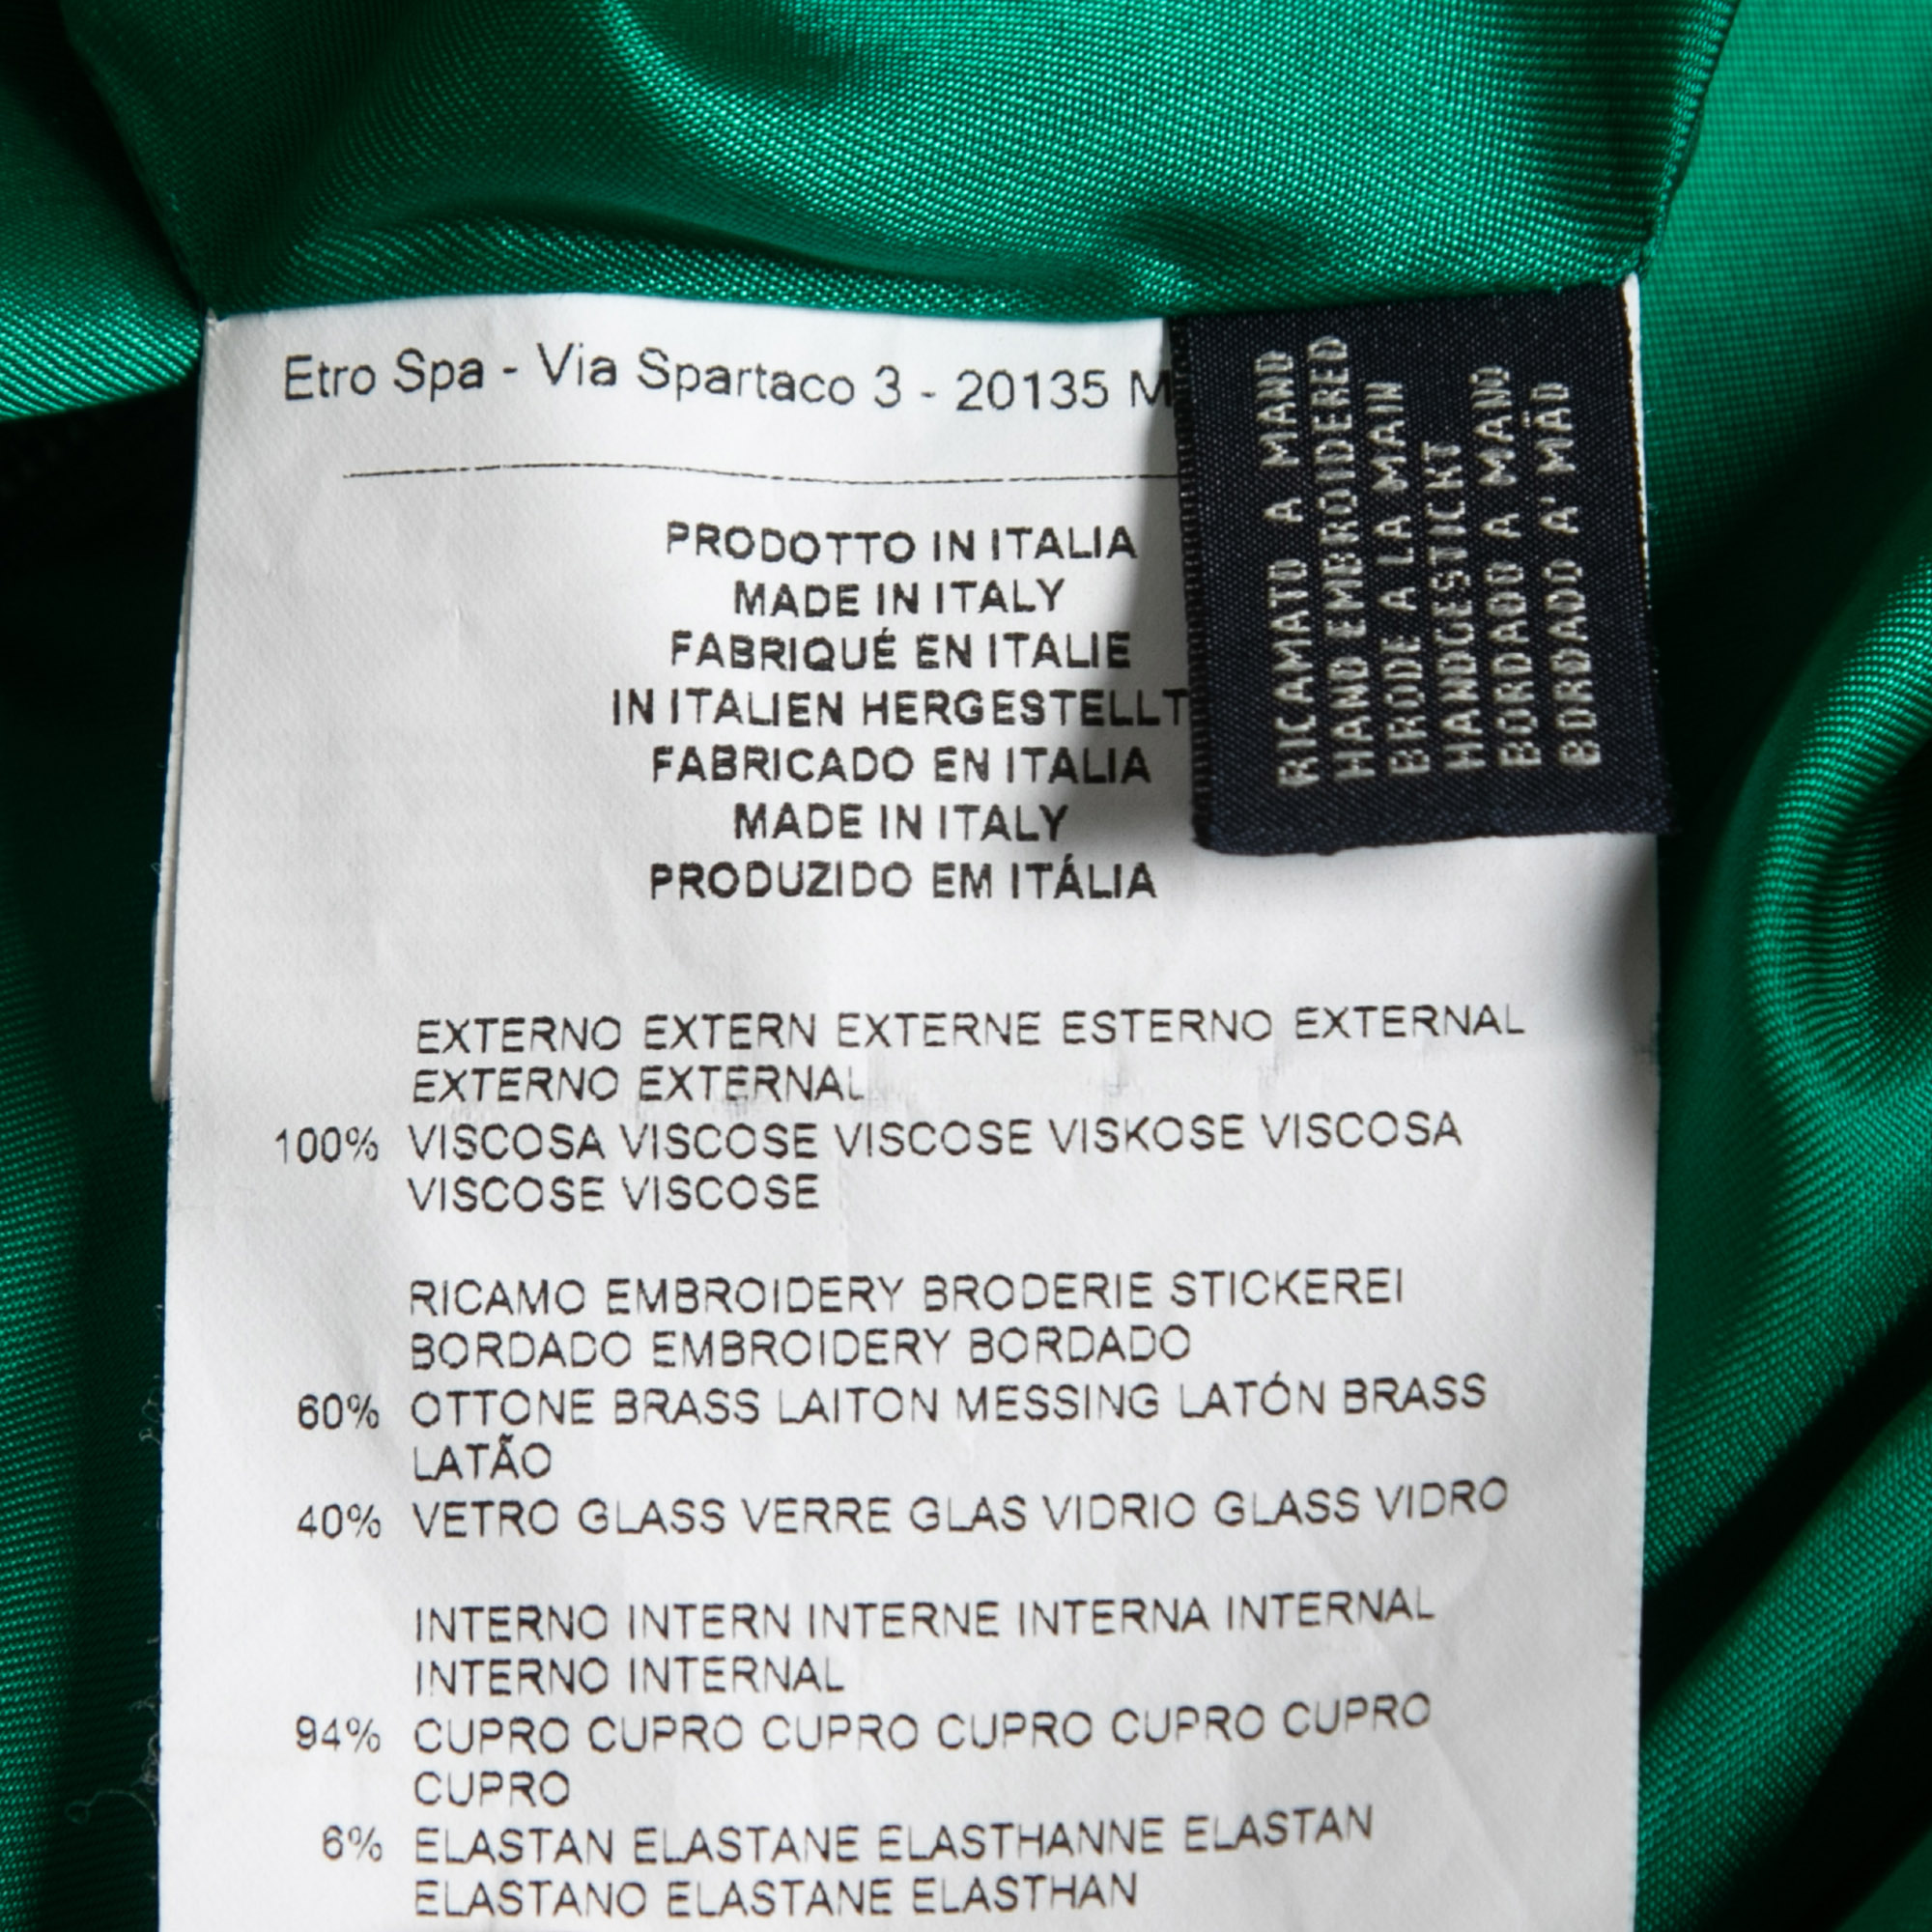 Etro Green Paisley Printed Crepe Embellished Maxi Dress S